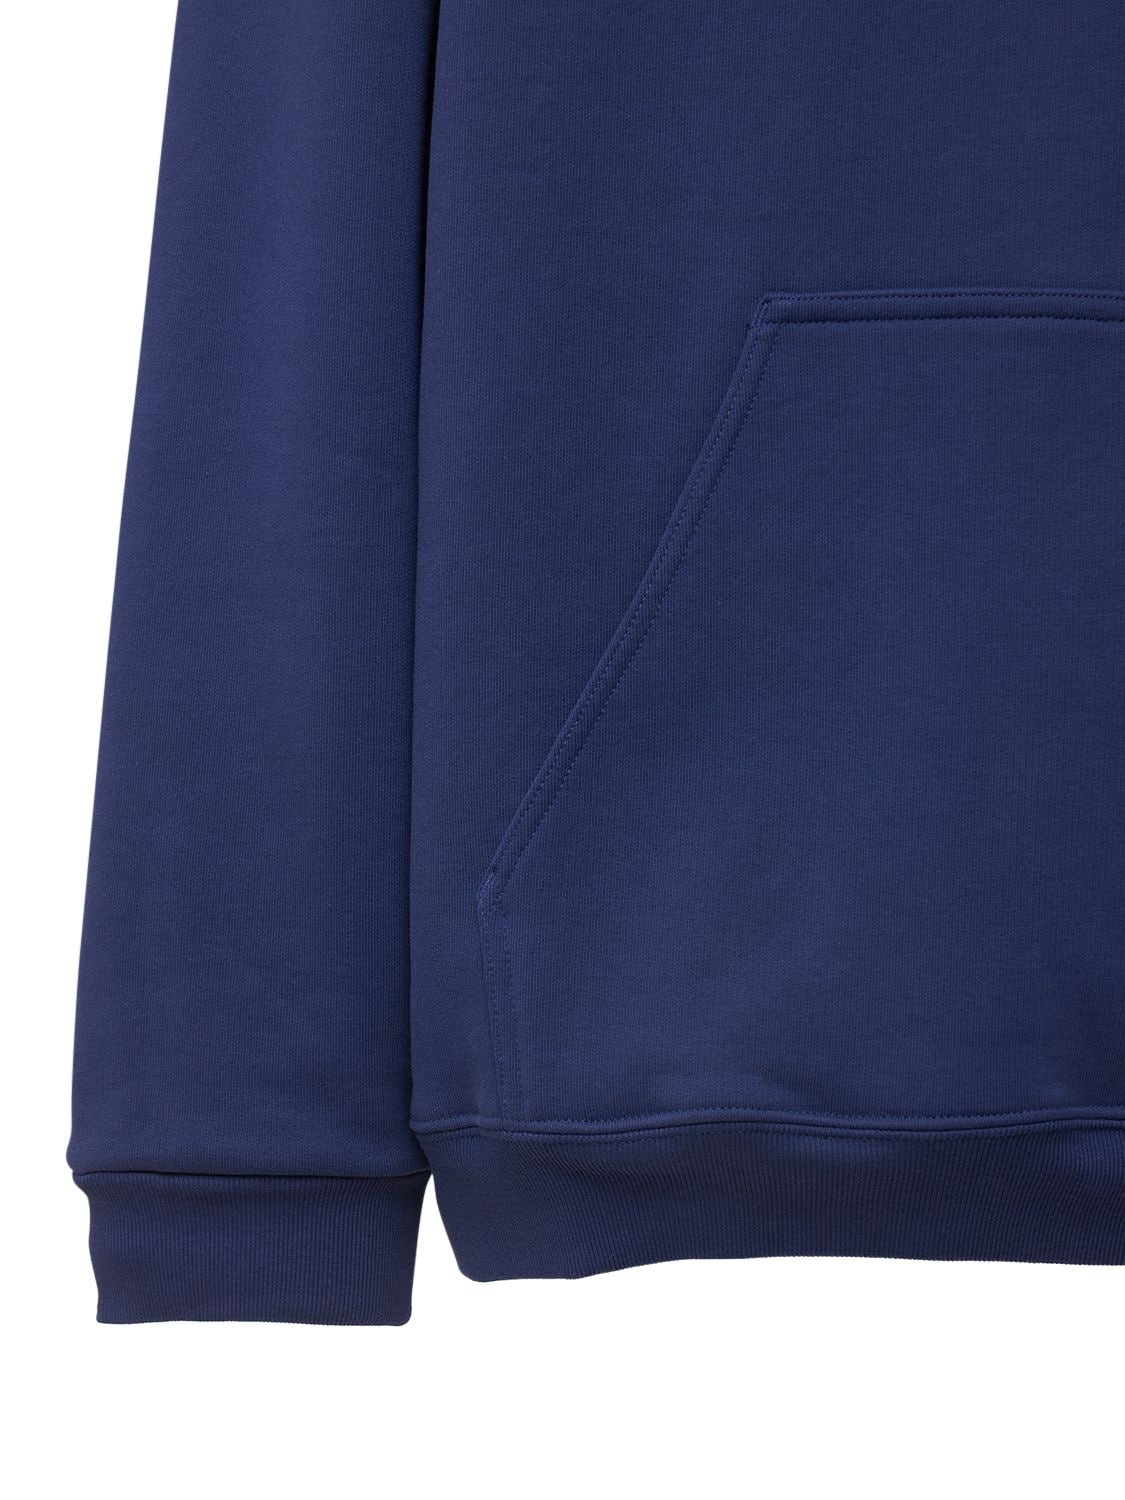 Shop Balenciaga Printed Cotton Sweatshirt Hoodie In Blue